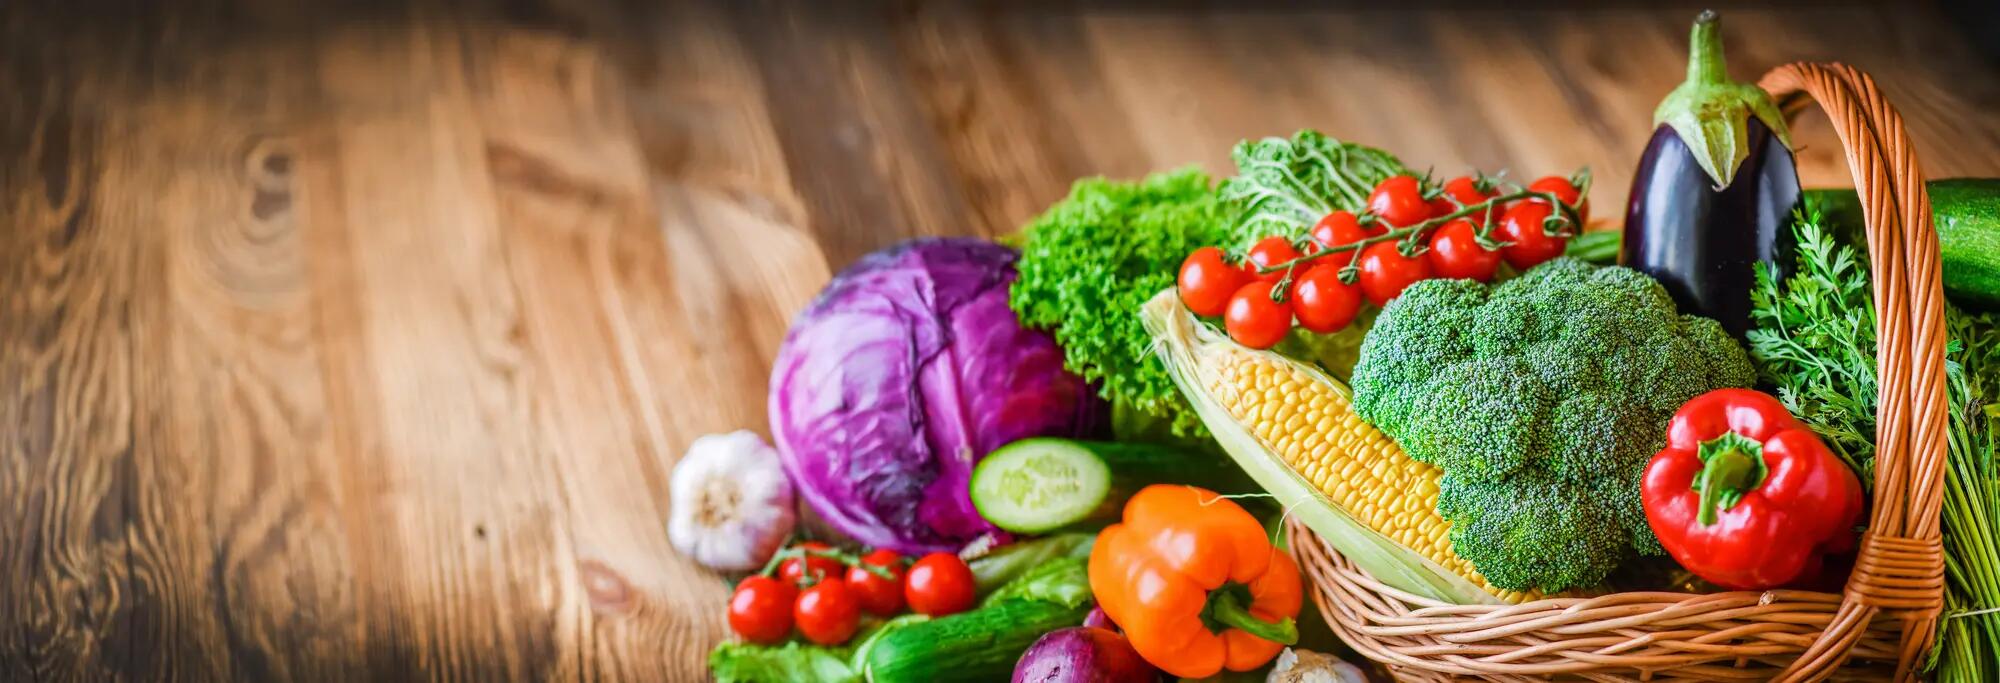 Légumes dans un panier tressé- Adobe Stock